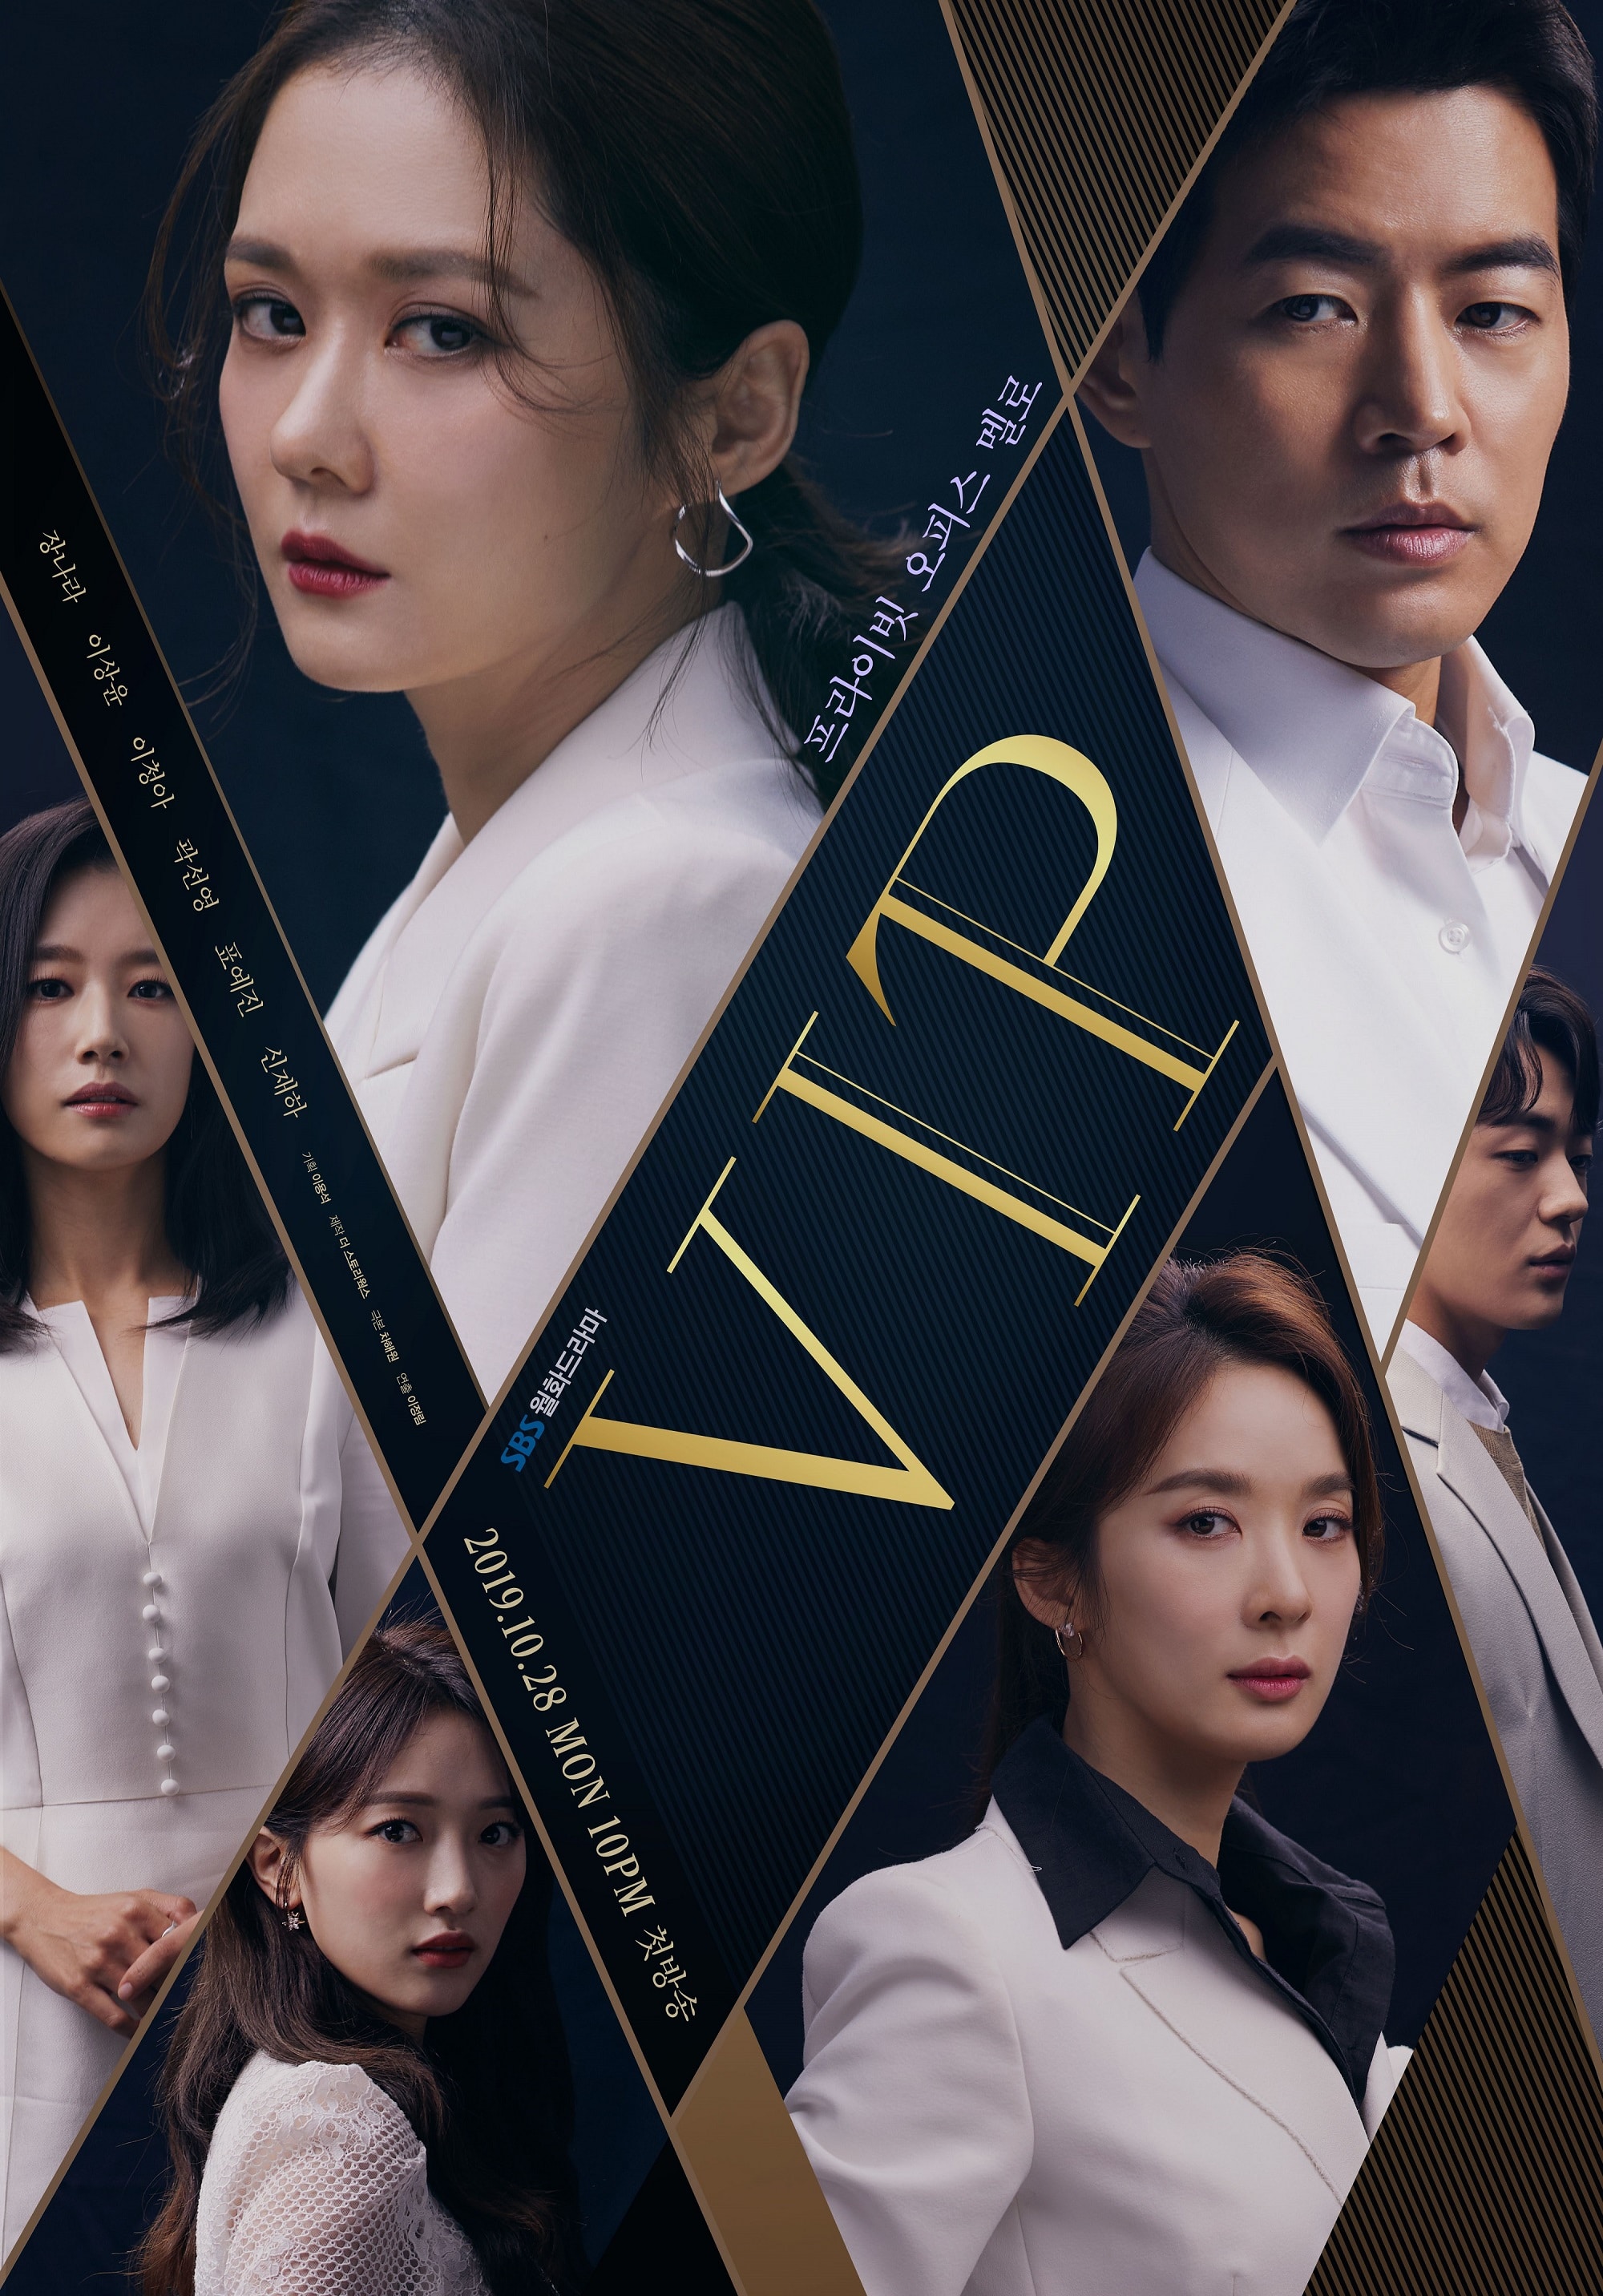 watch korean drama online free